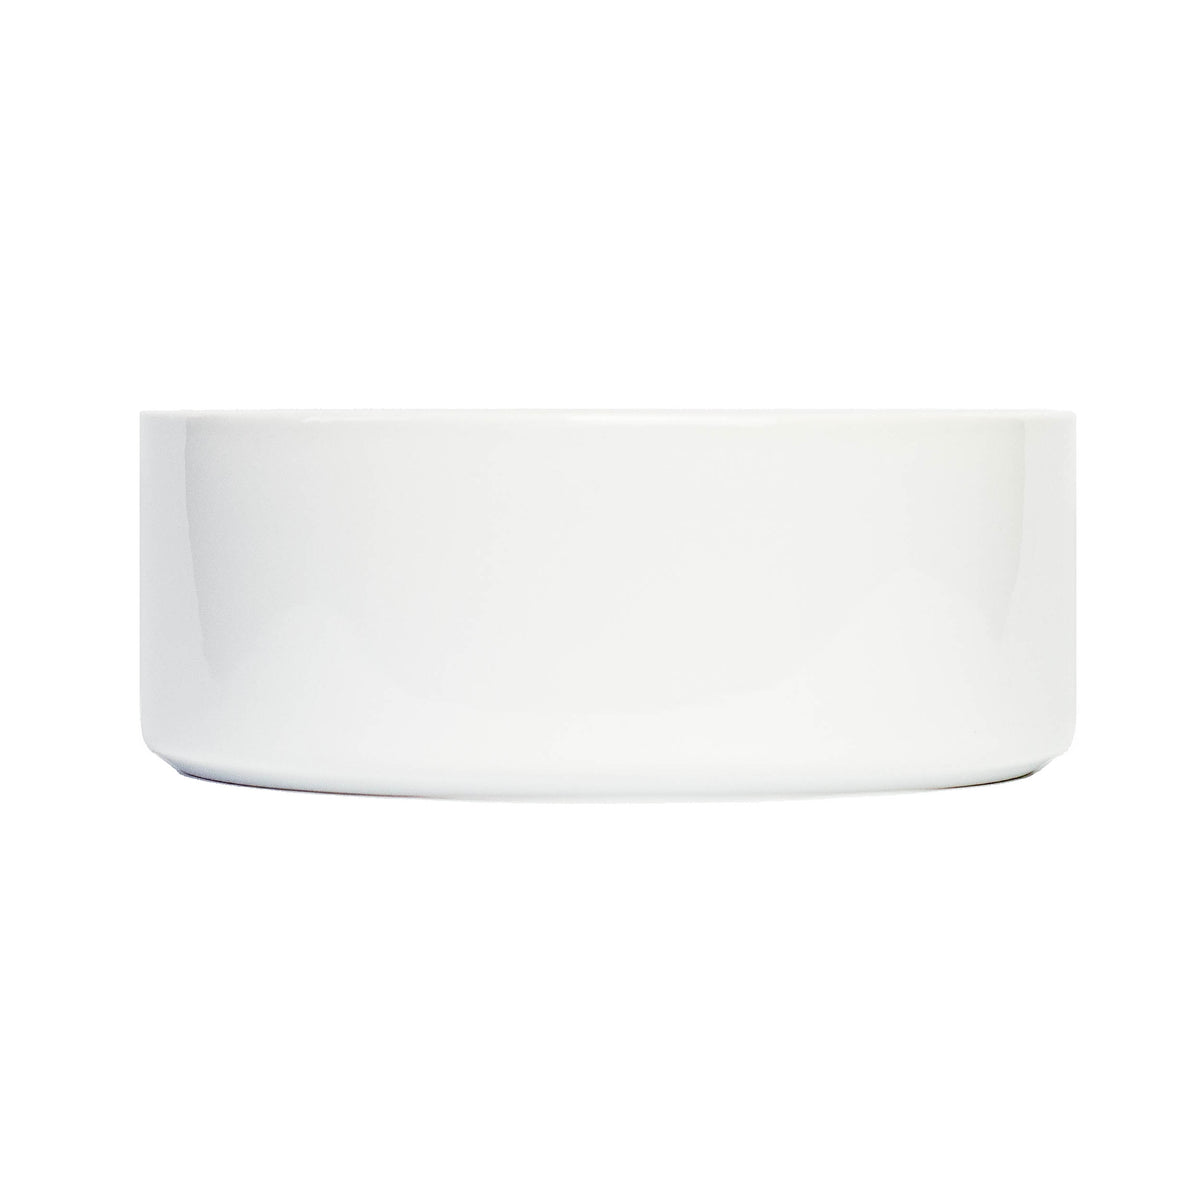 Personalised bowl for cats / ceramic - 22oz 650ml (design 1)